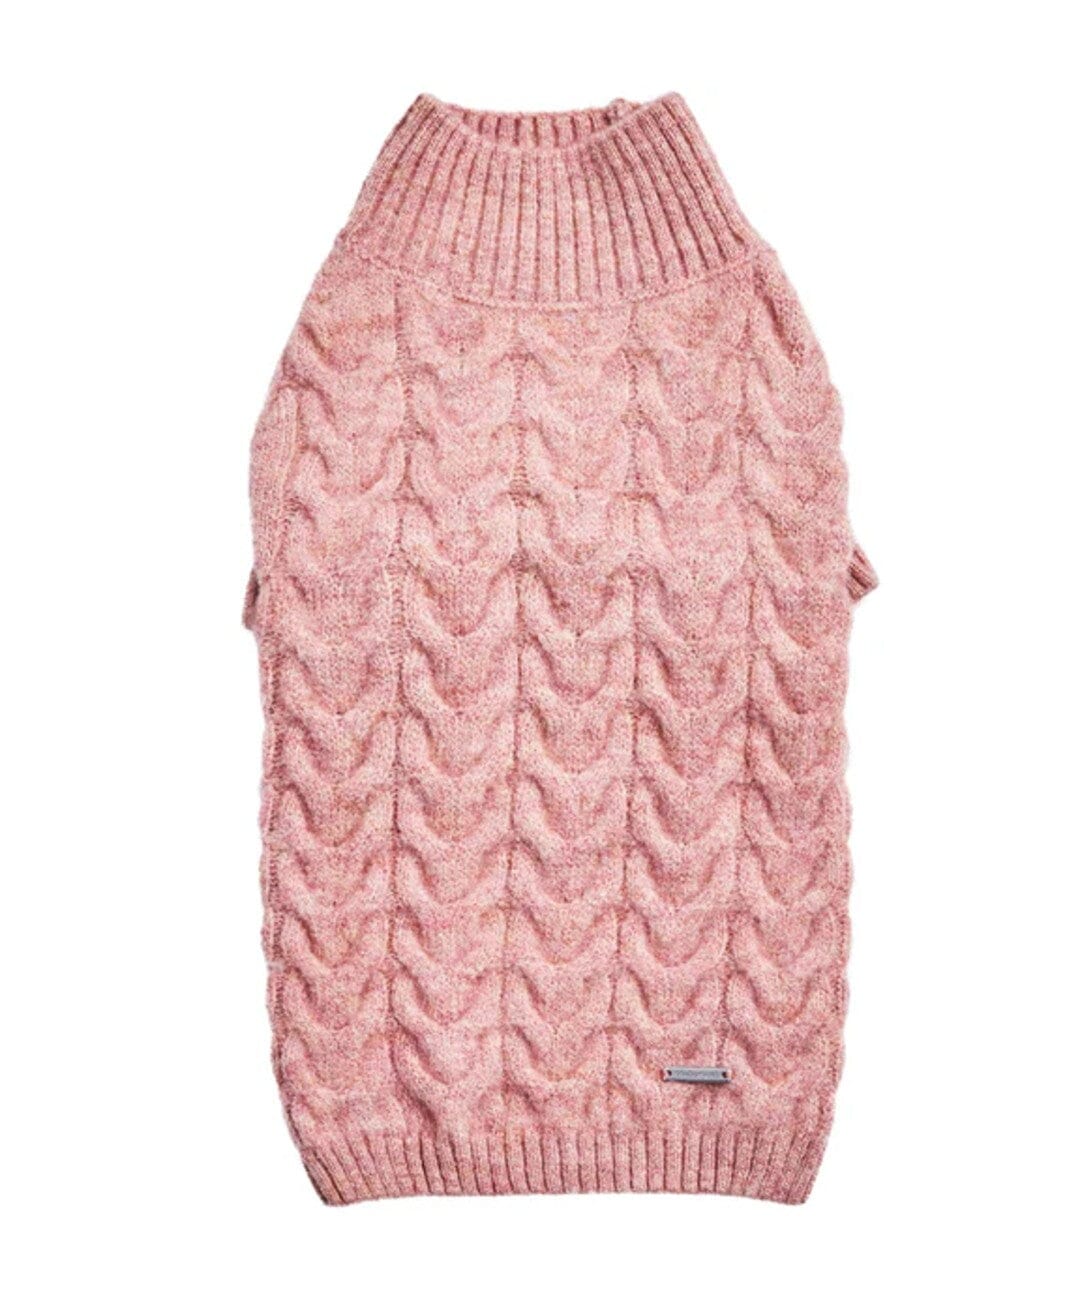 Blueberry Pet Fuzzy Textured Knit Dog Turtleneck Sweater Sweater Blueberry Pet 10" Pink 